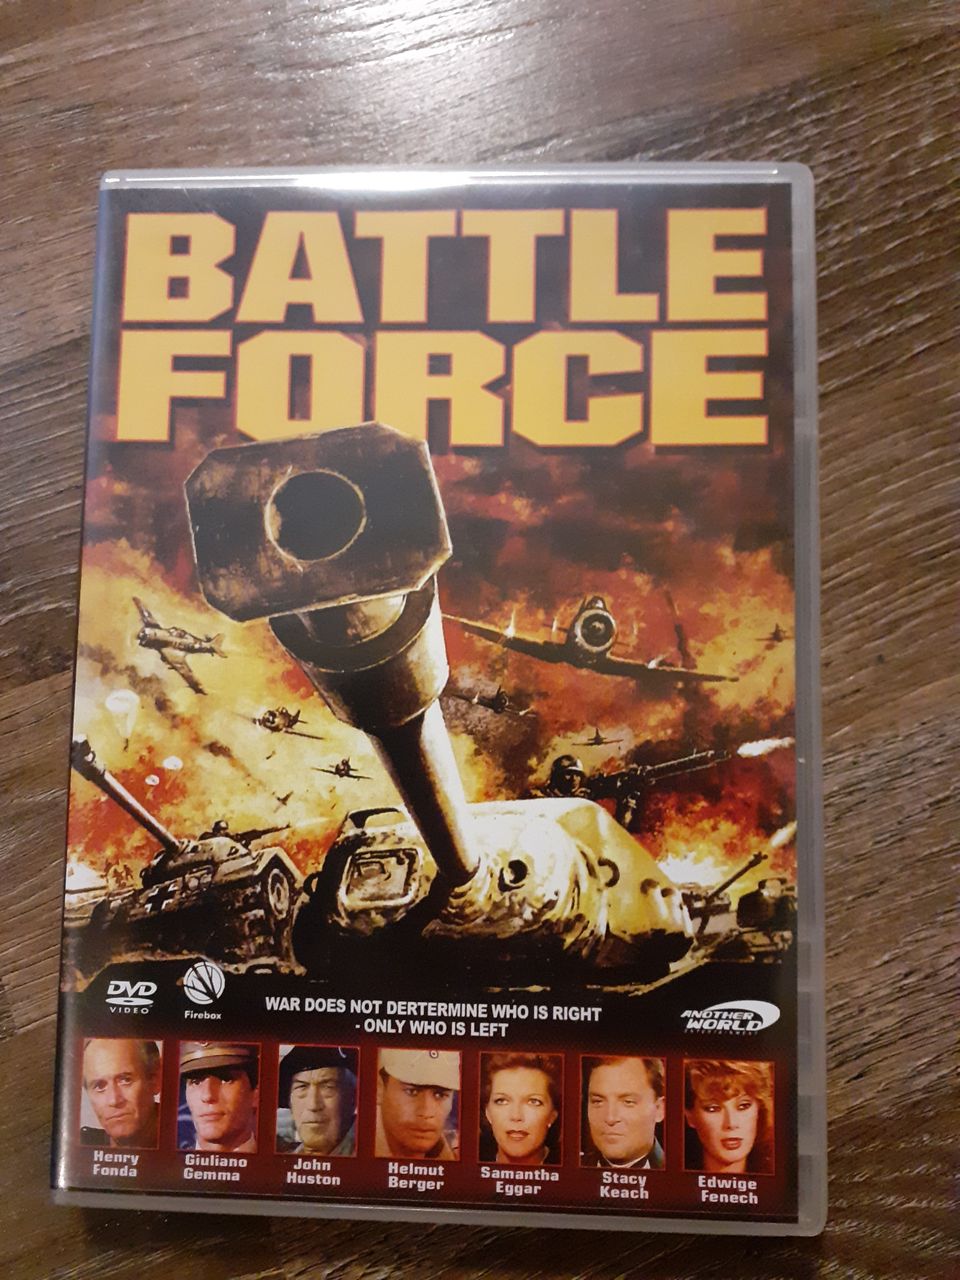 Battle force